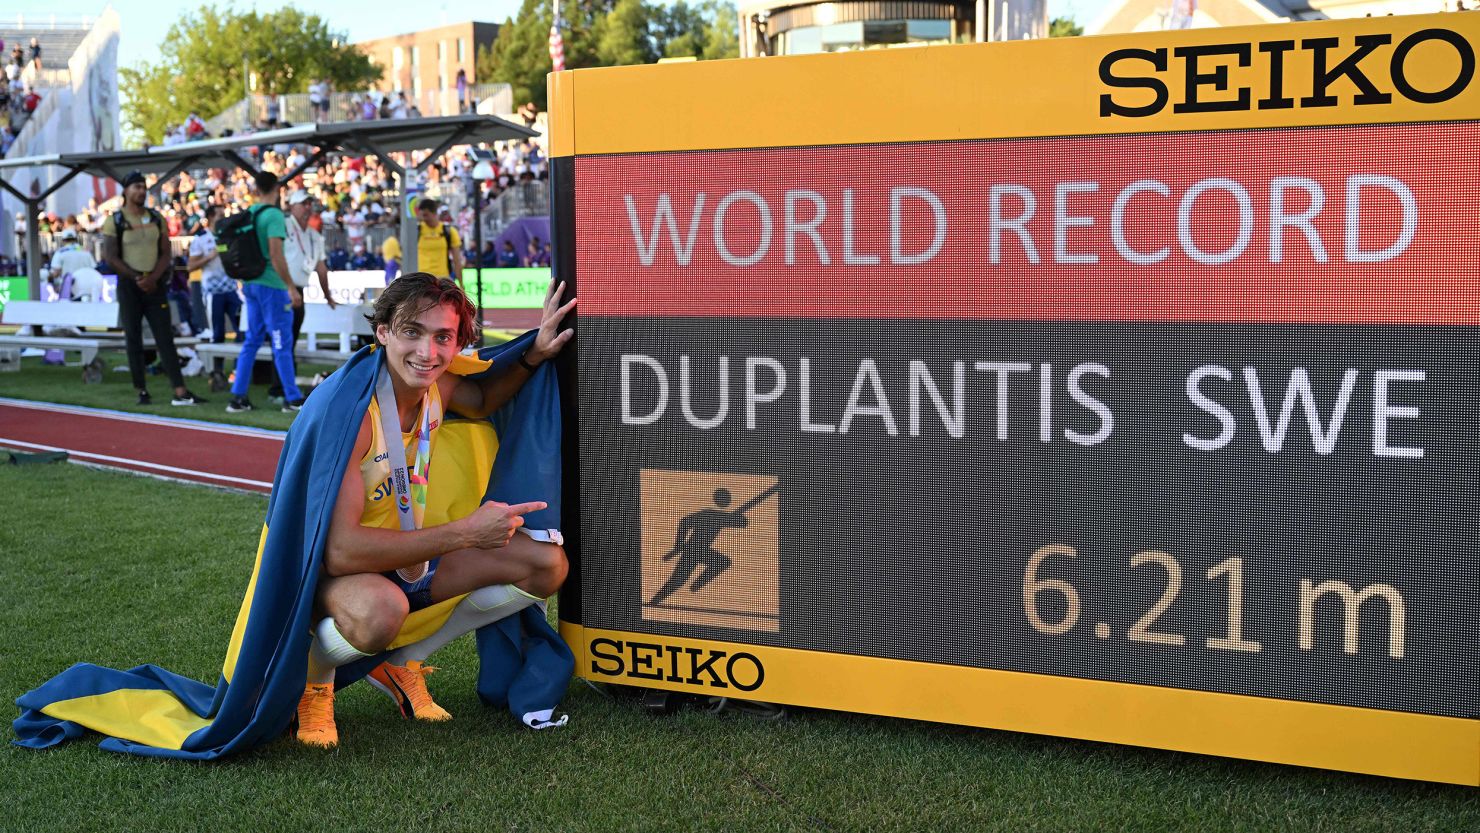 Duplantis breaks world pole vault record with 6.21m in Oregon, News, Oregon 22